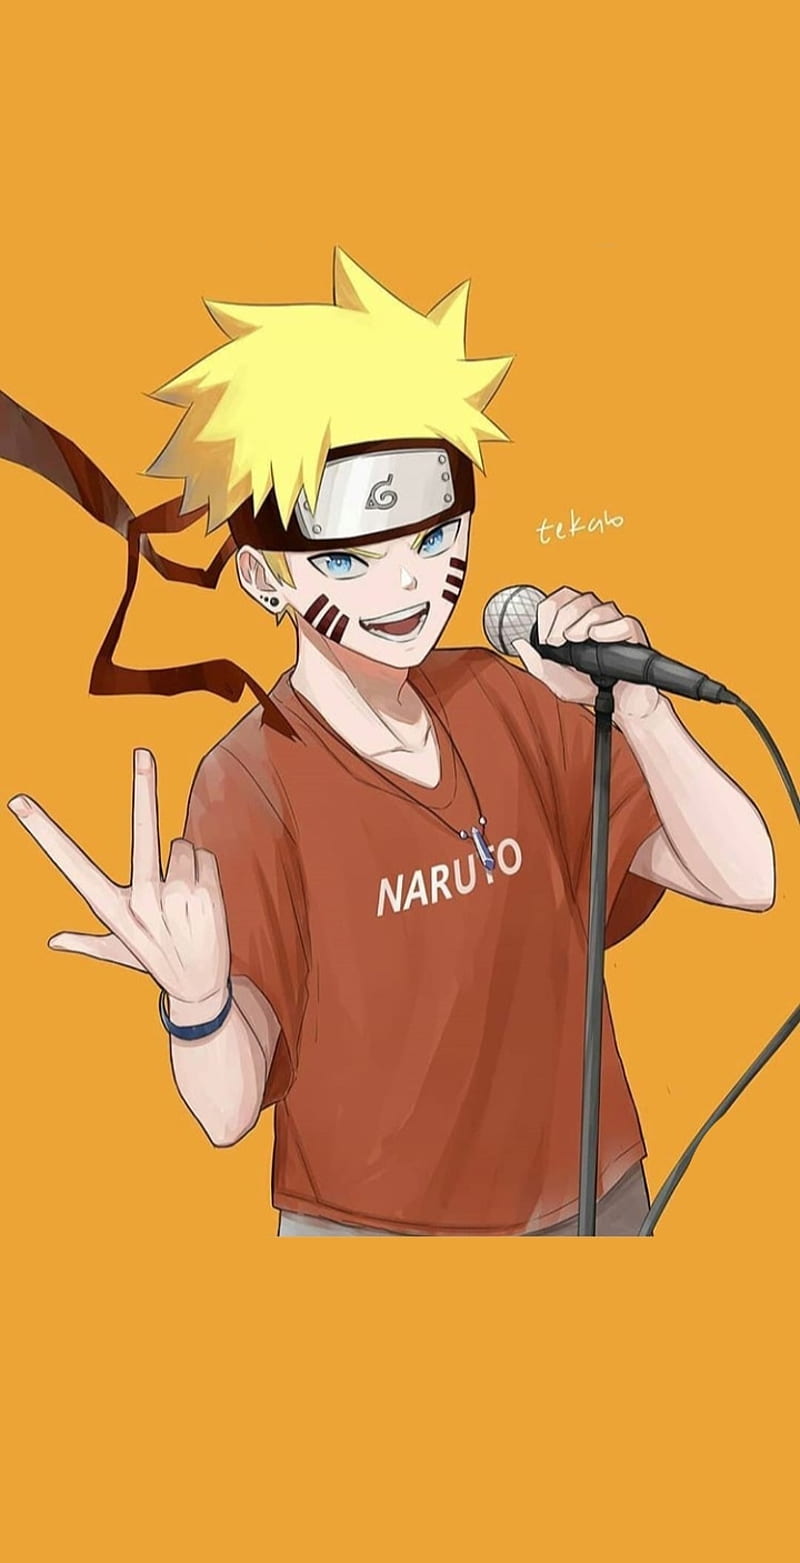 Naruto Phone Wallpapers - Top 80 Free Naruto Backgrounds